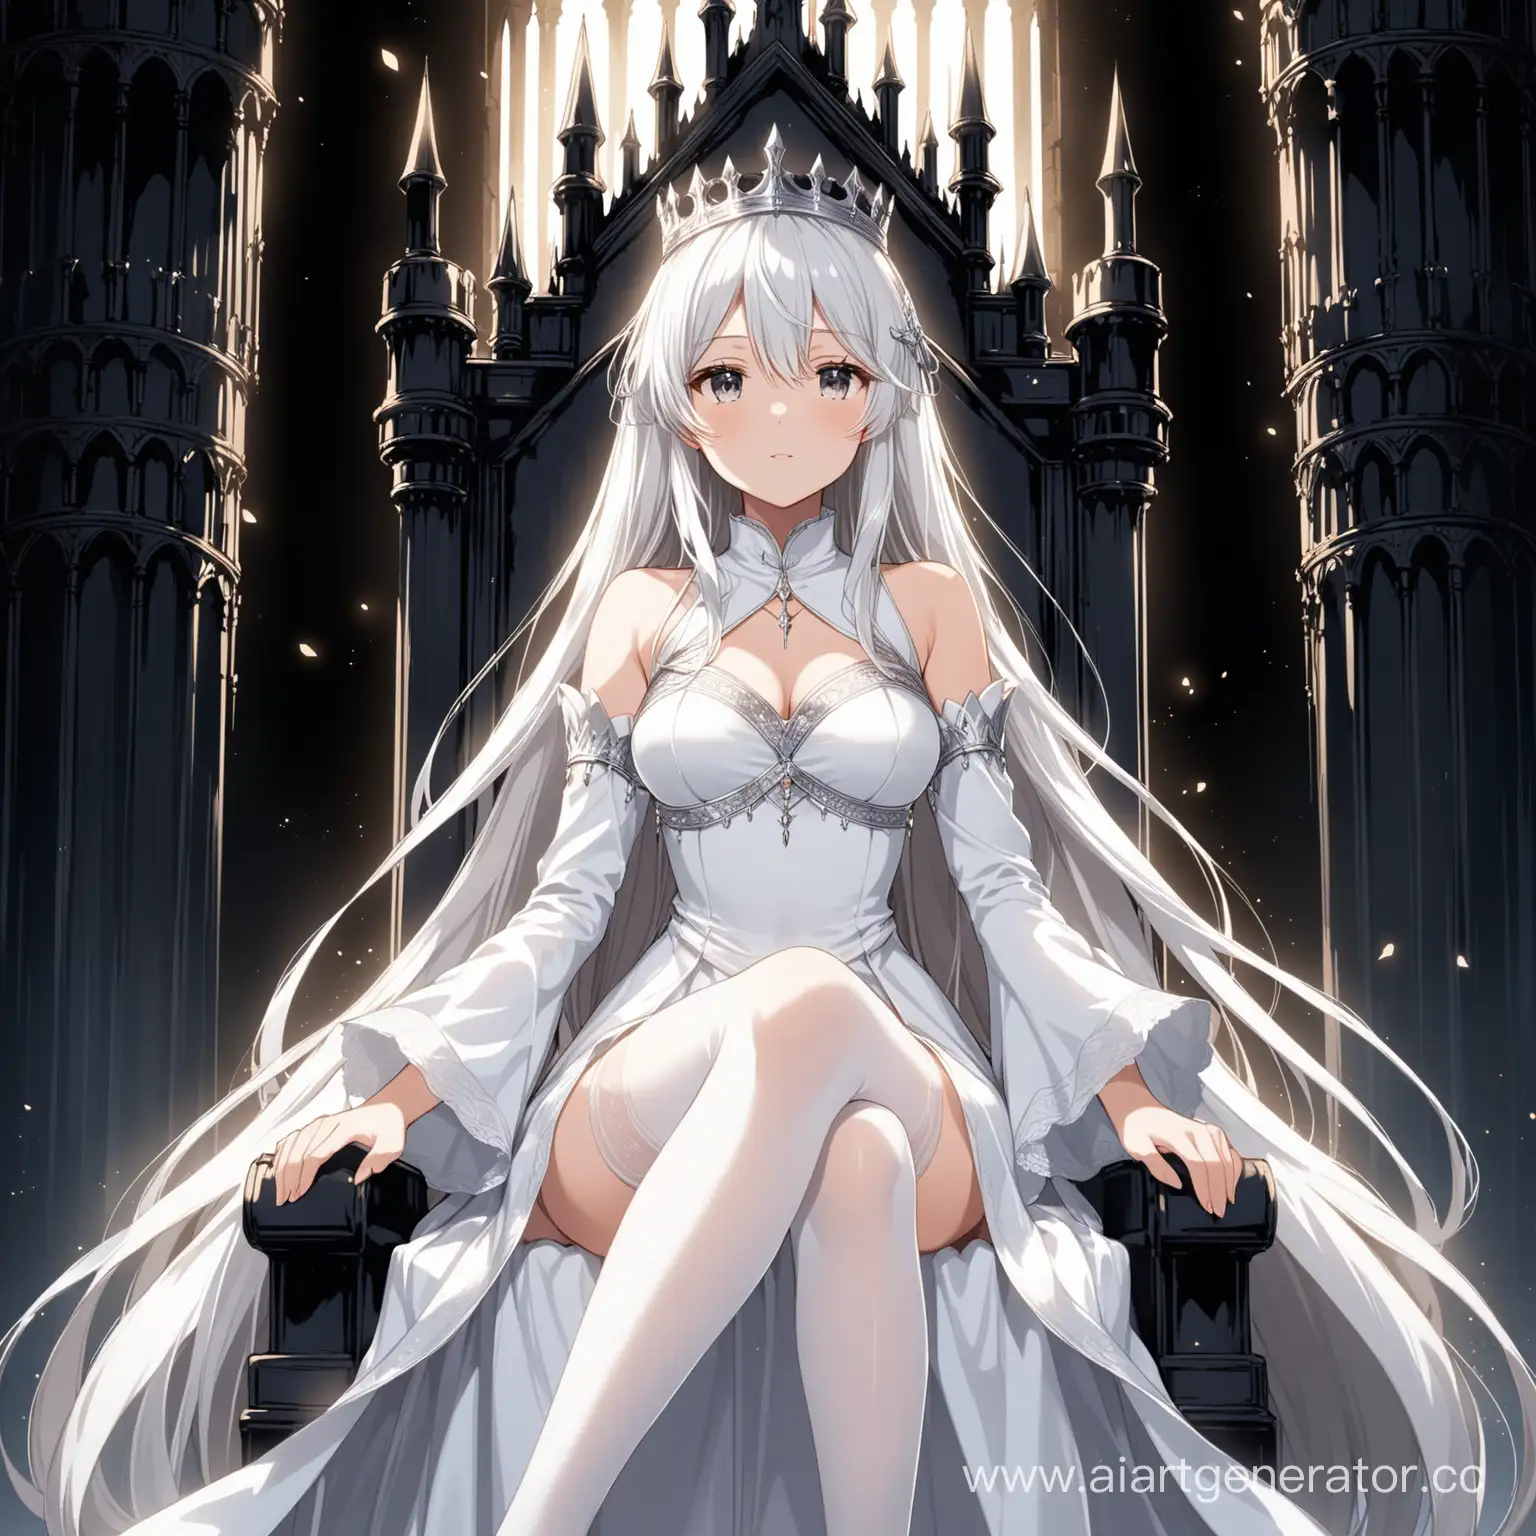 SilverHaired-Anime-Girl-on-Throne-in-Dark-Castle